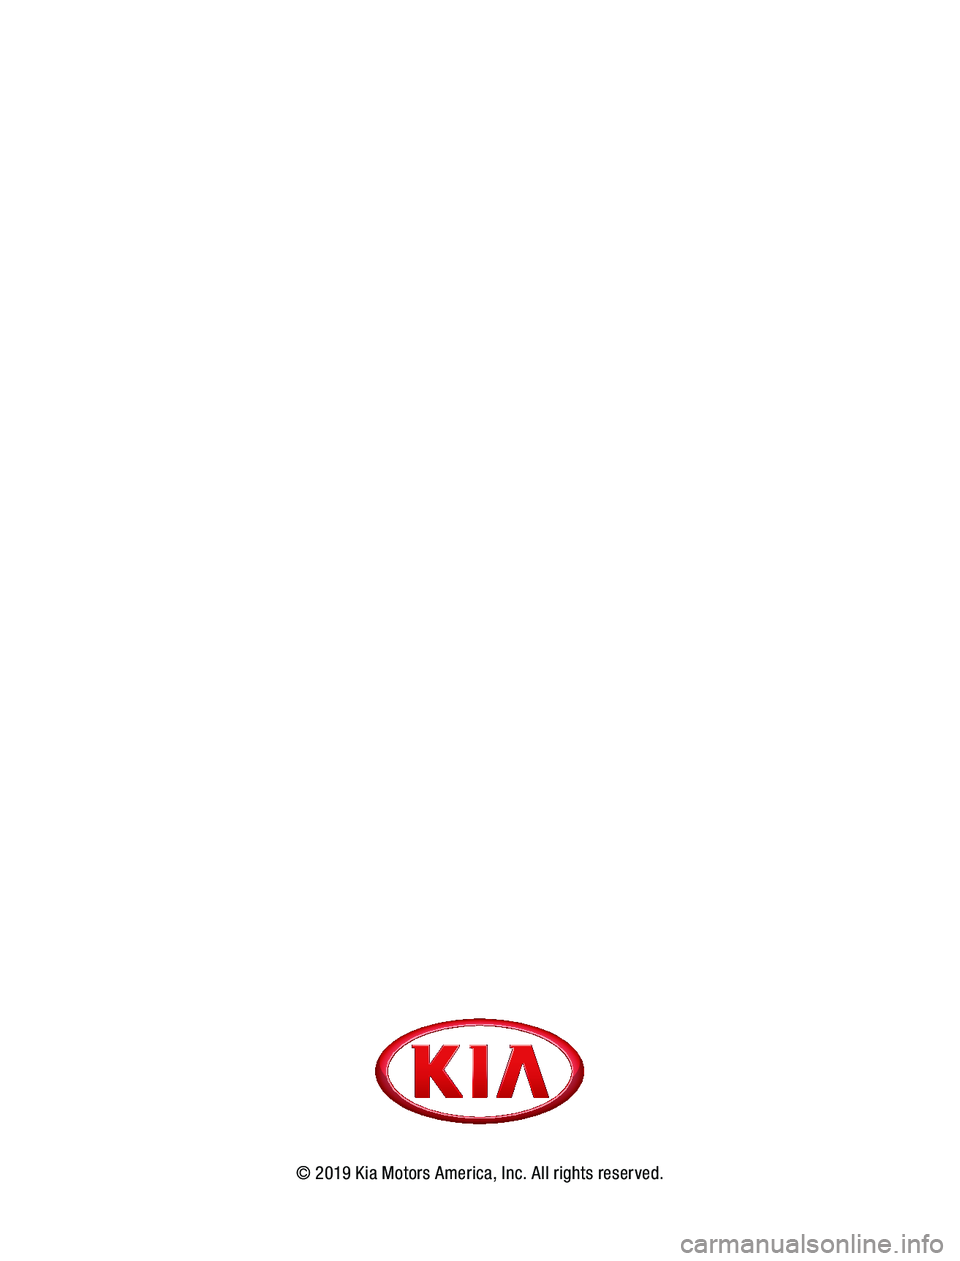 KIA K900 2020  Advanced Driving Assistance System © 2019 Kia Motors America, Inc  All rights reserved                 